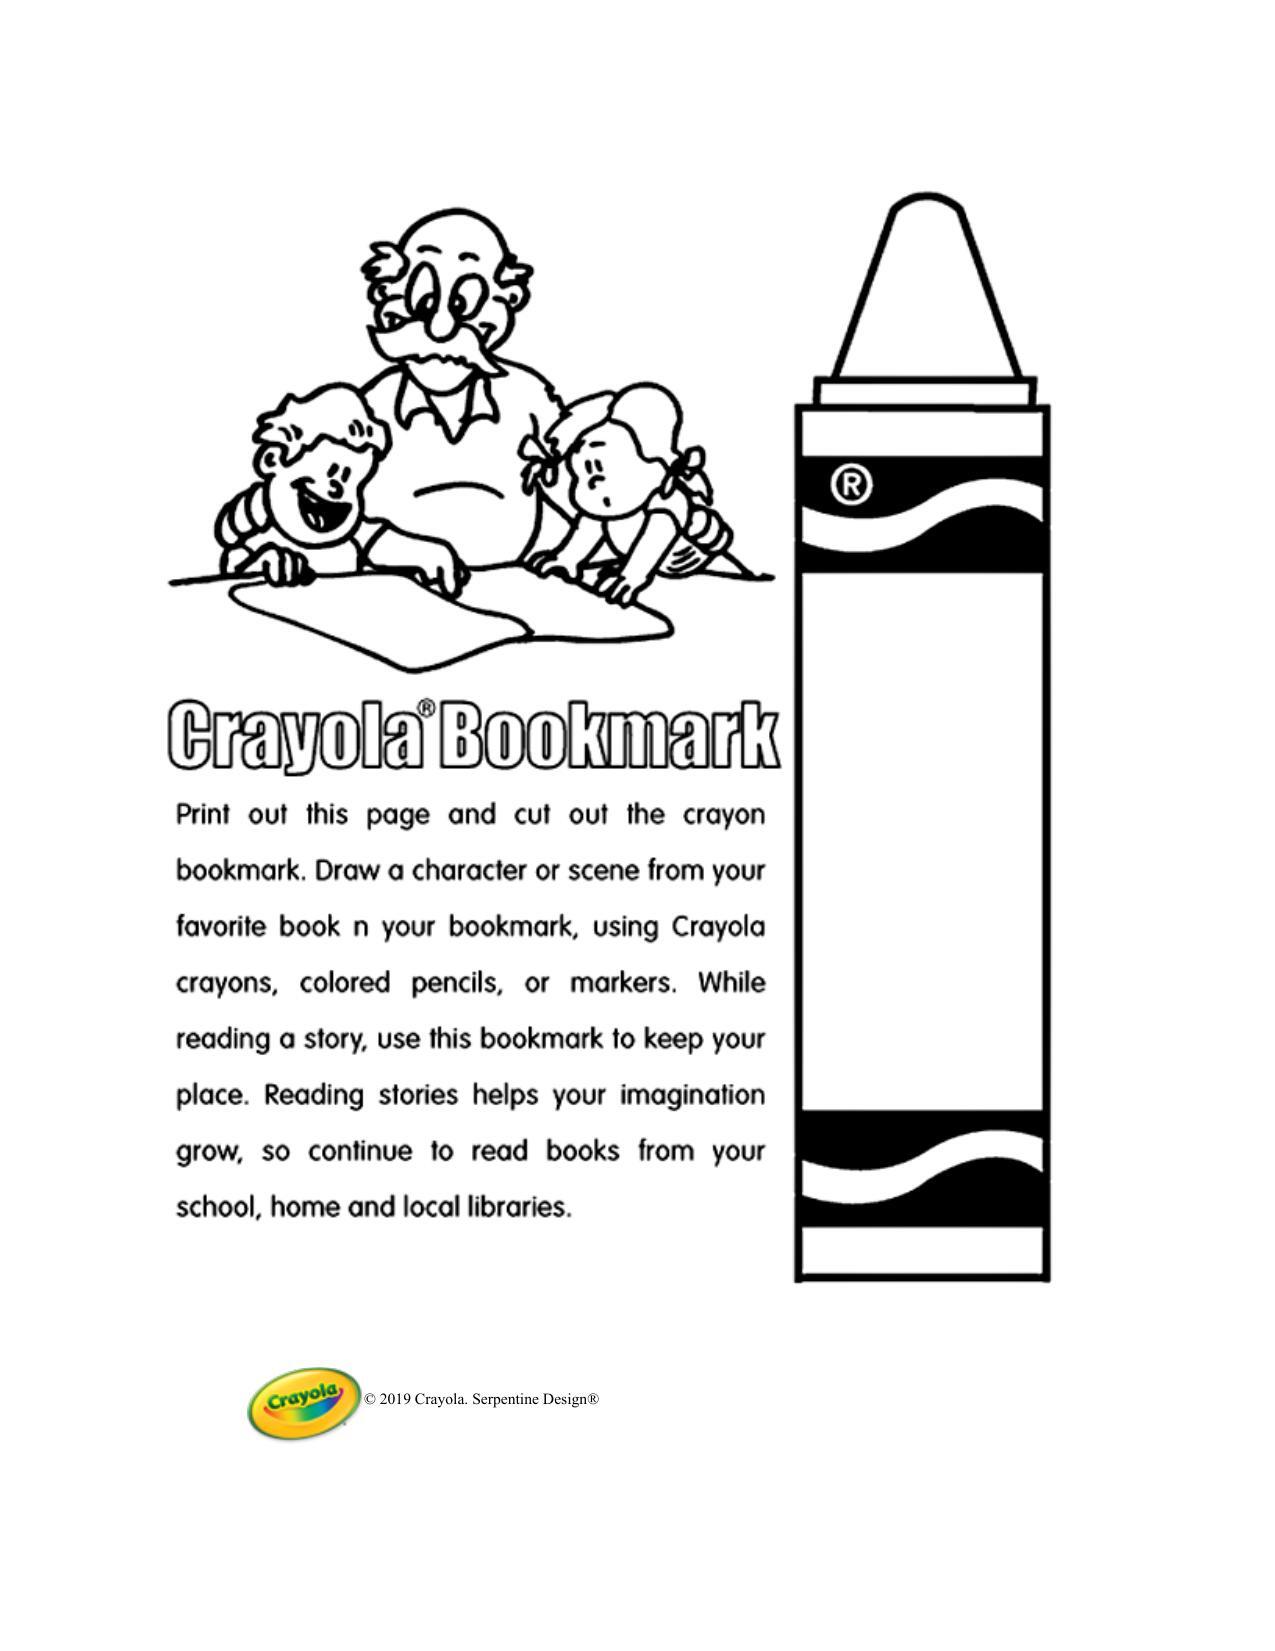 Crayon Bookmark